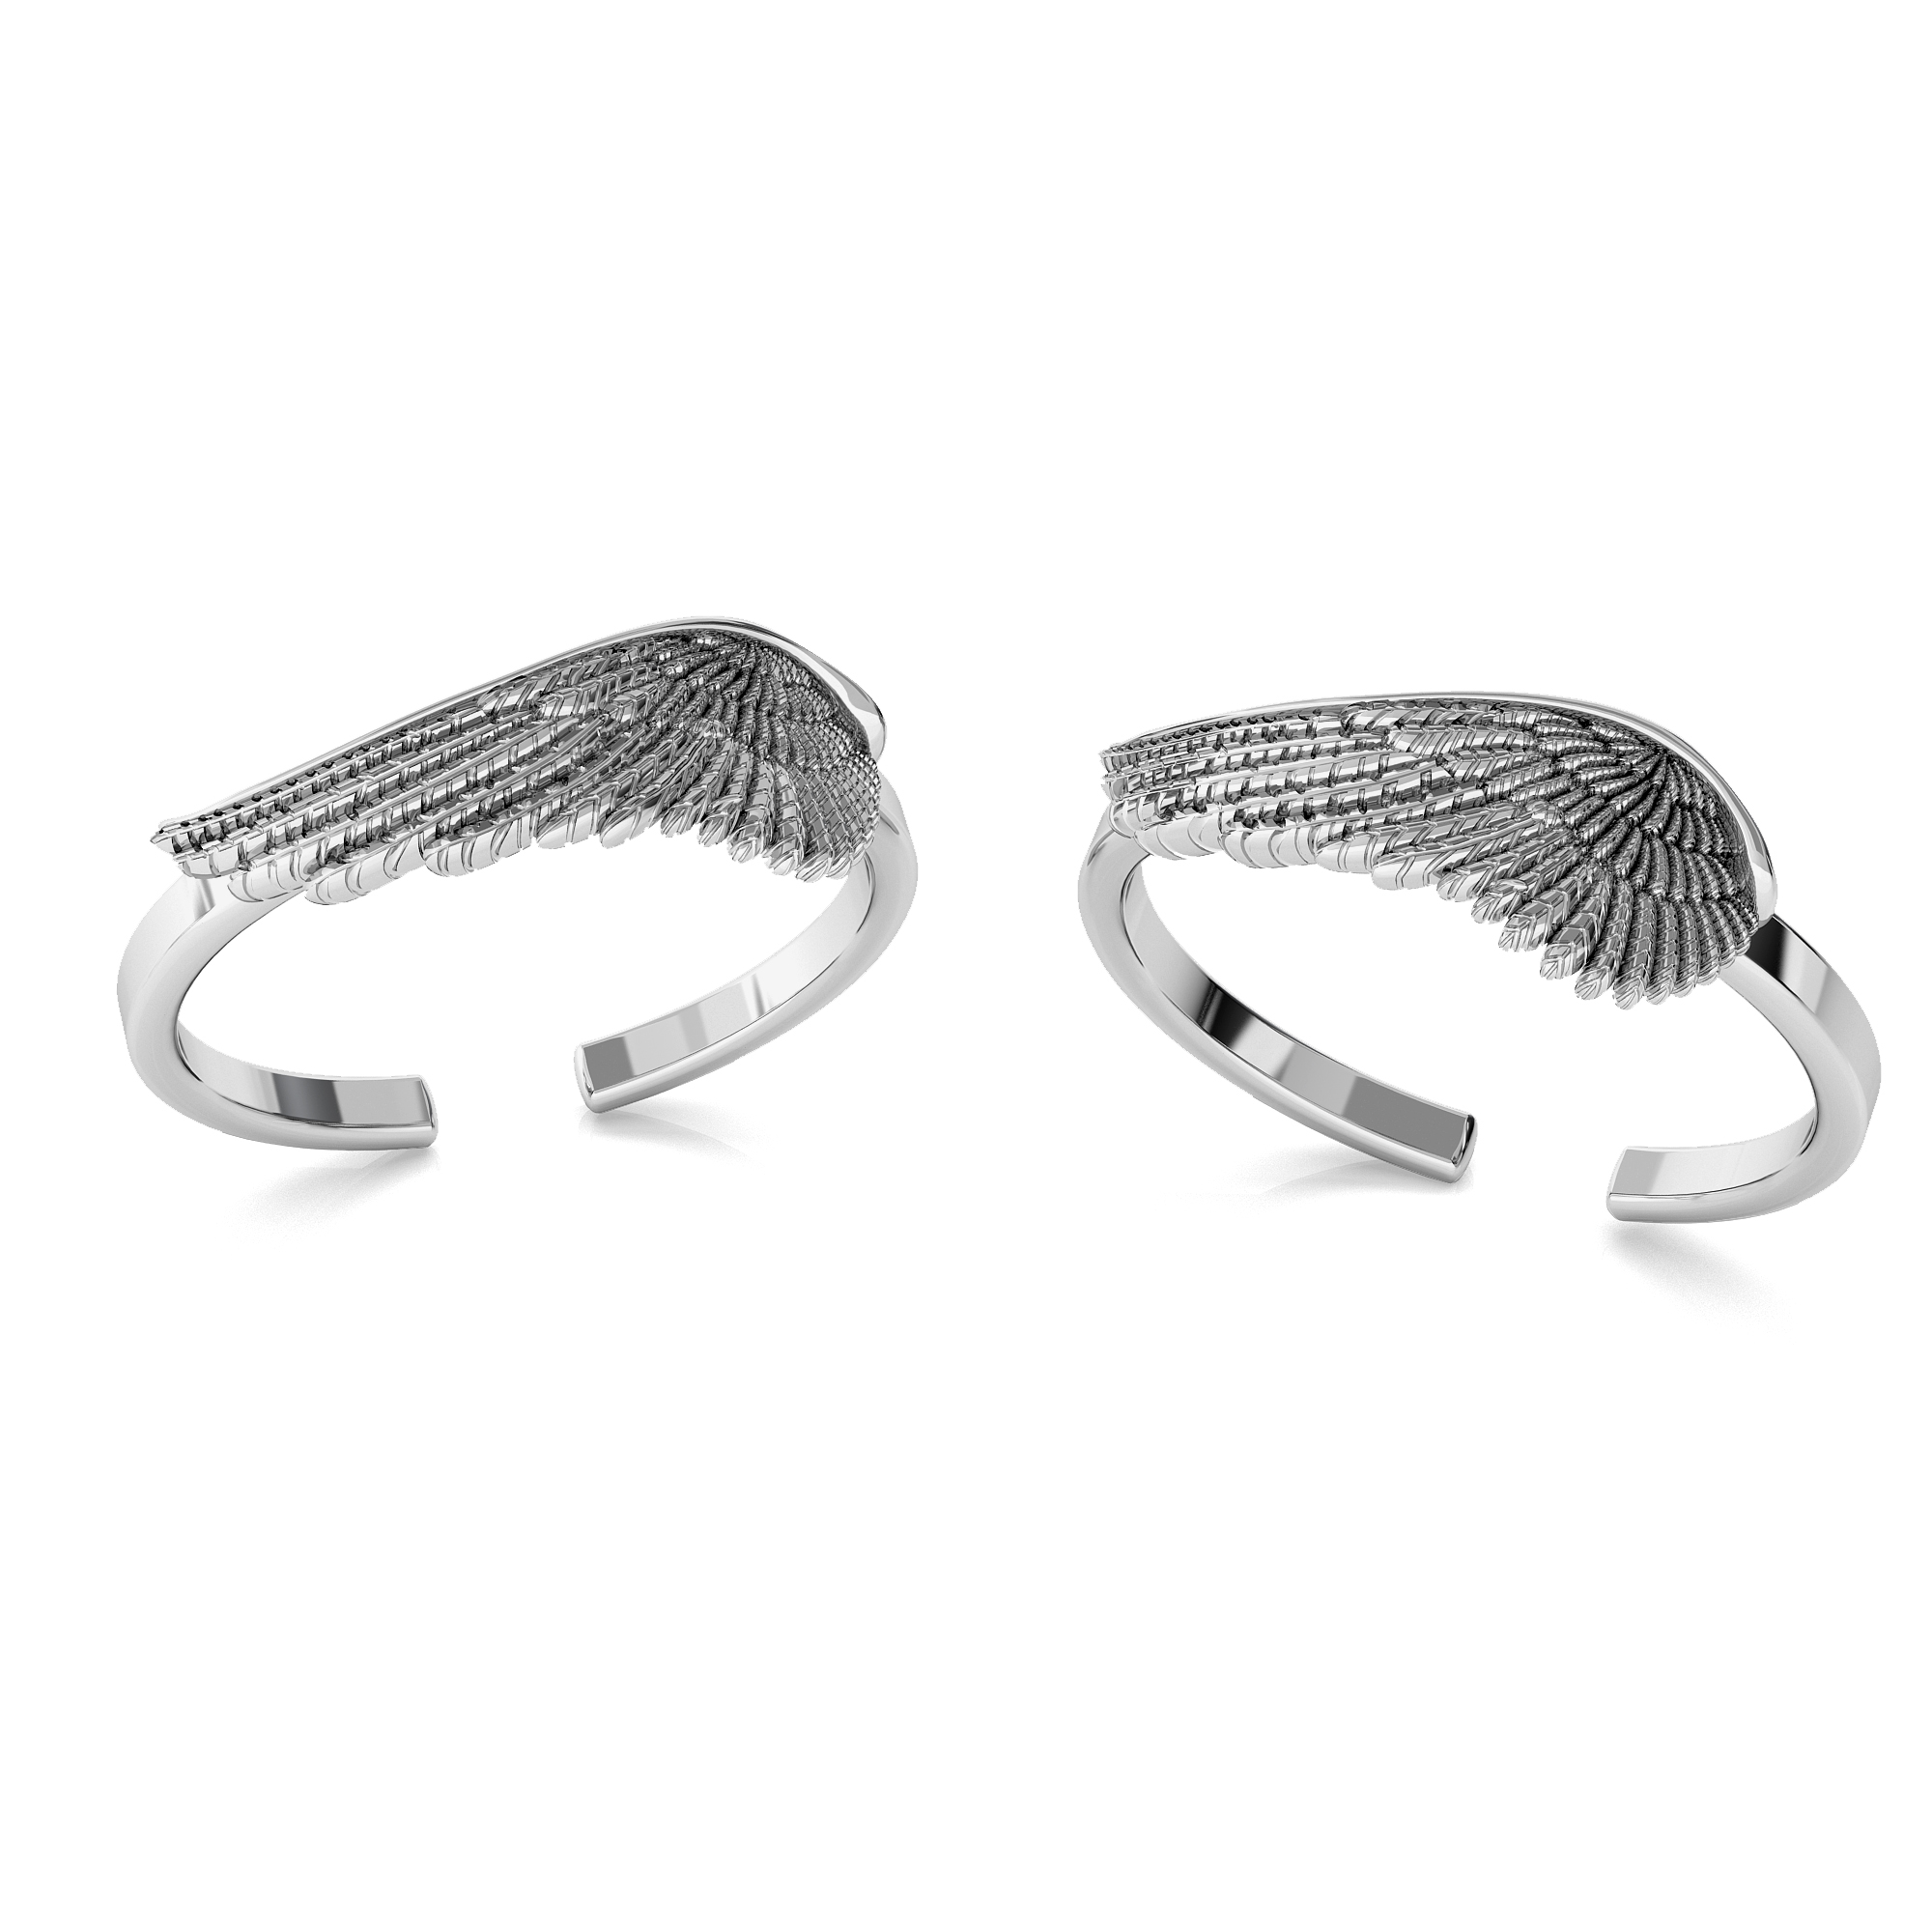 Angel wings ring, silver 925